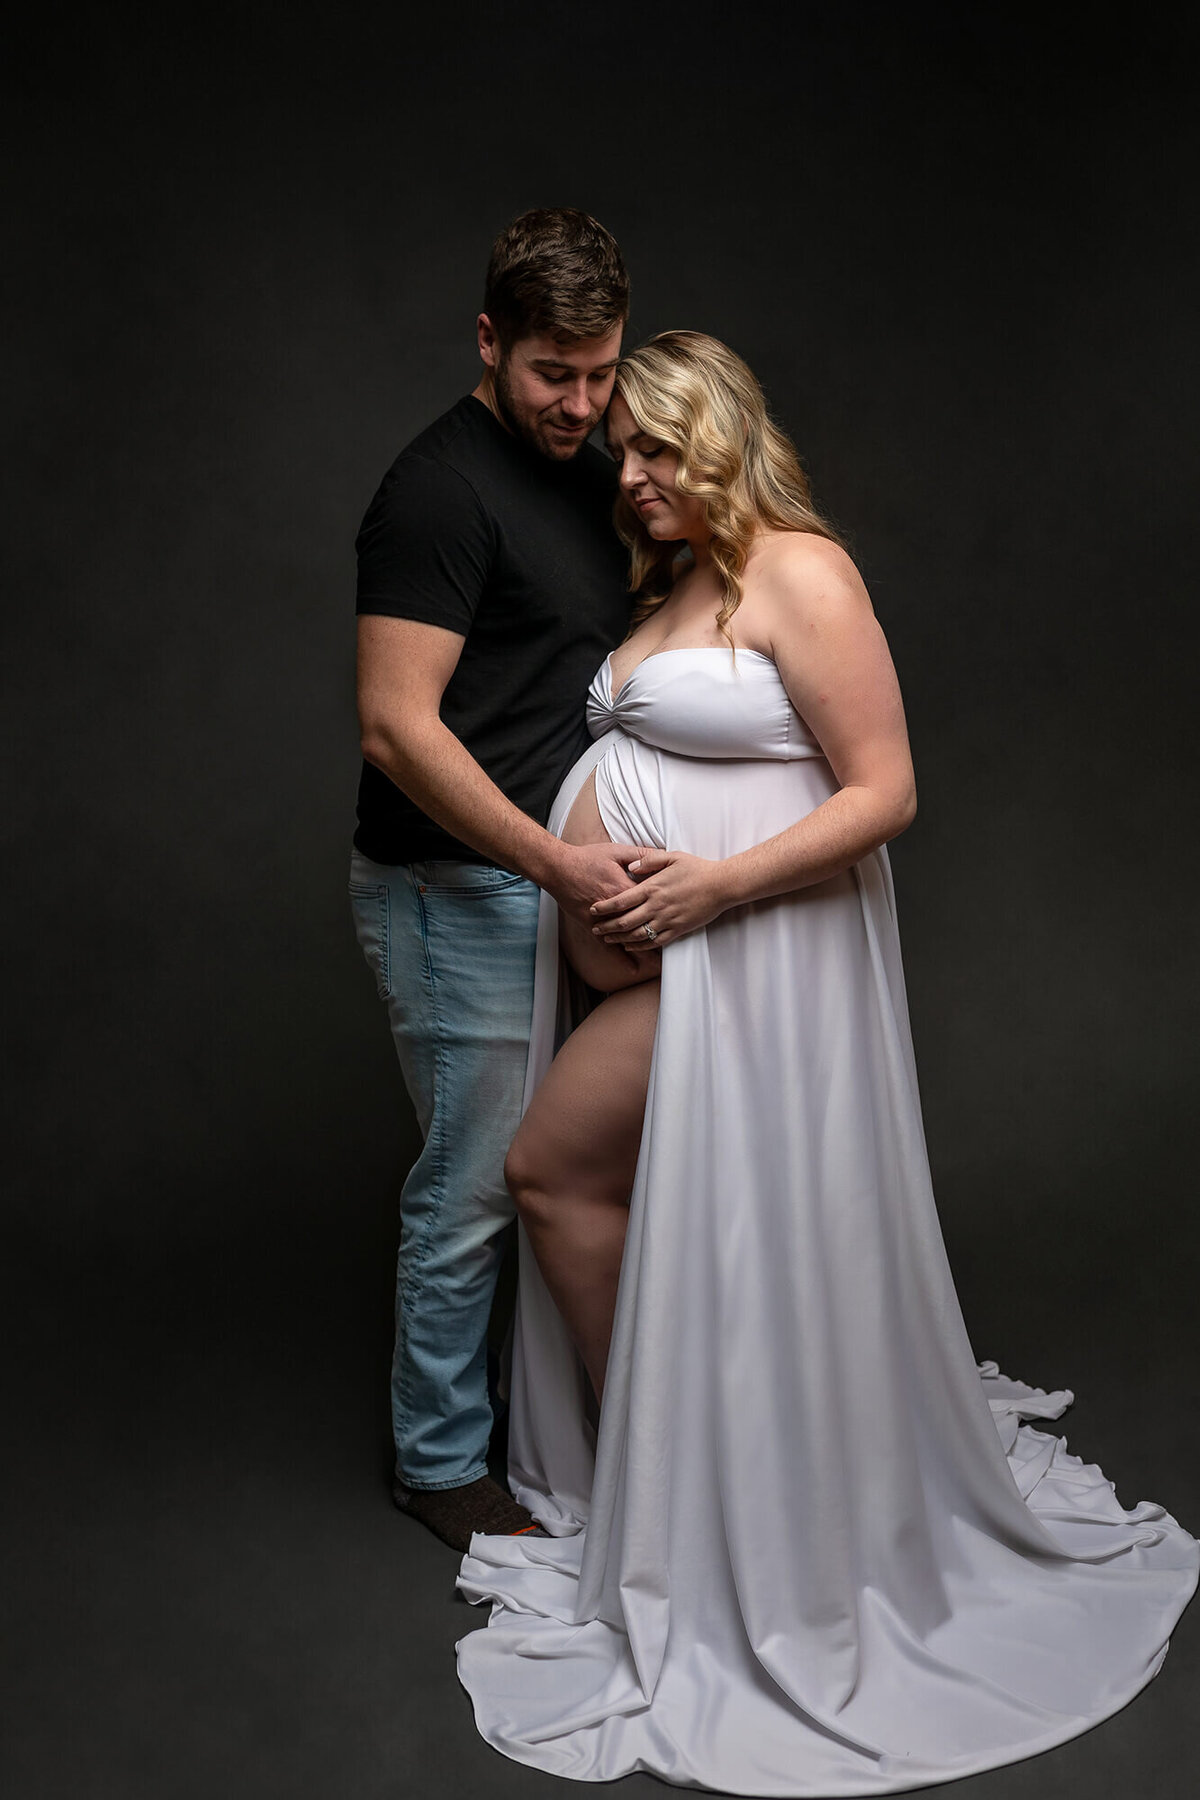 Maternity portrait session done in Jennifer Brandes Photography Studio.